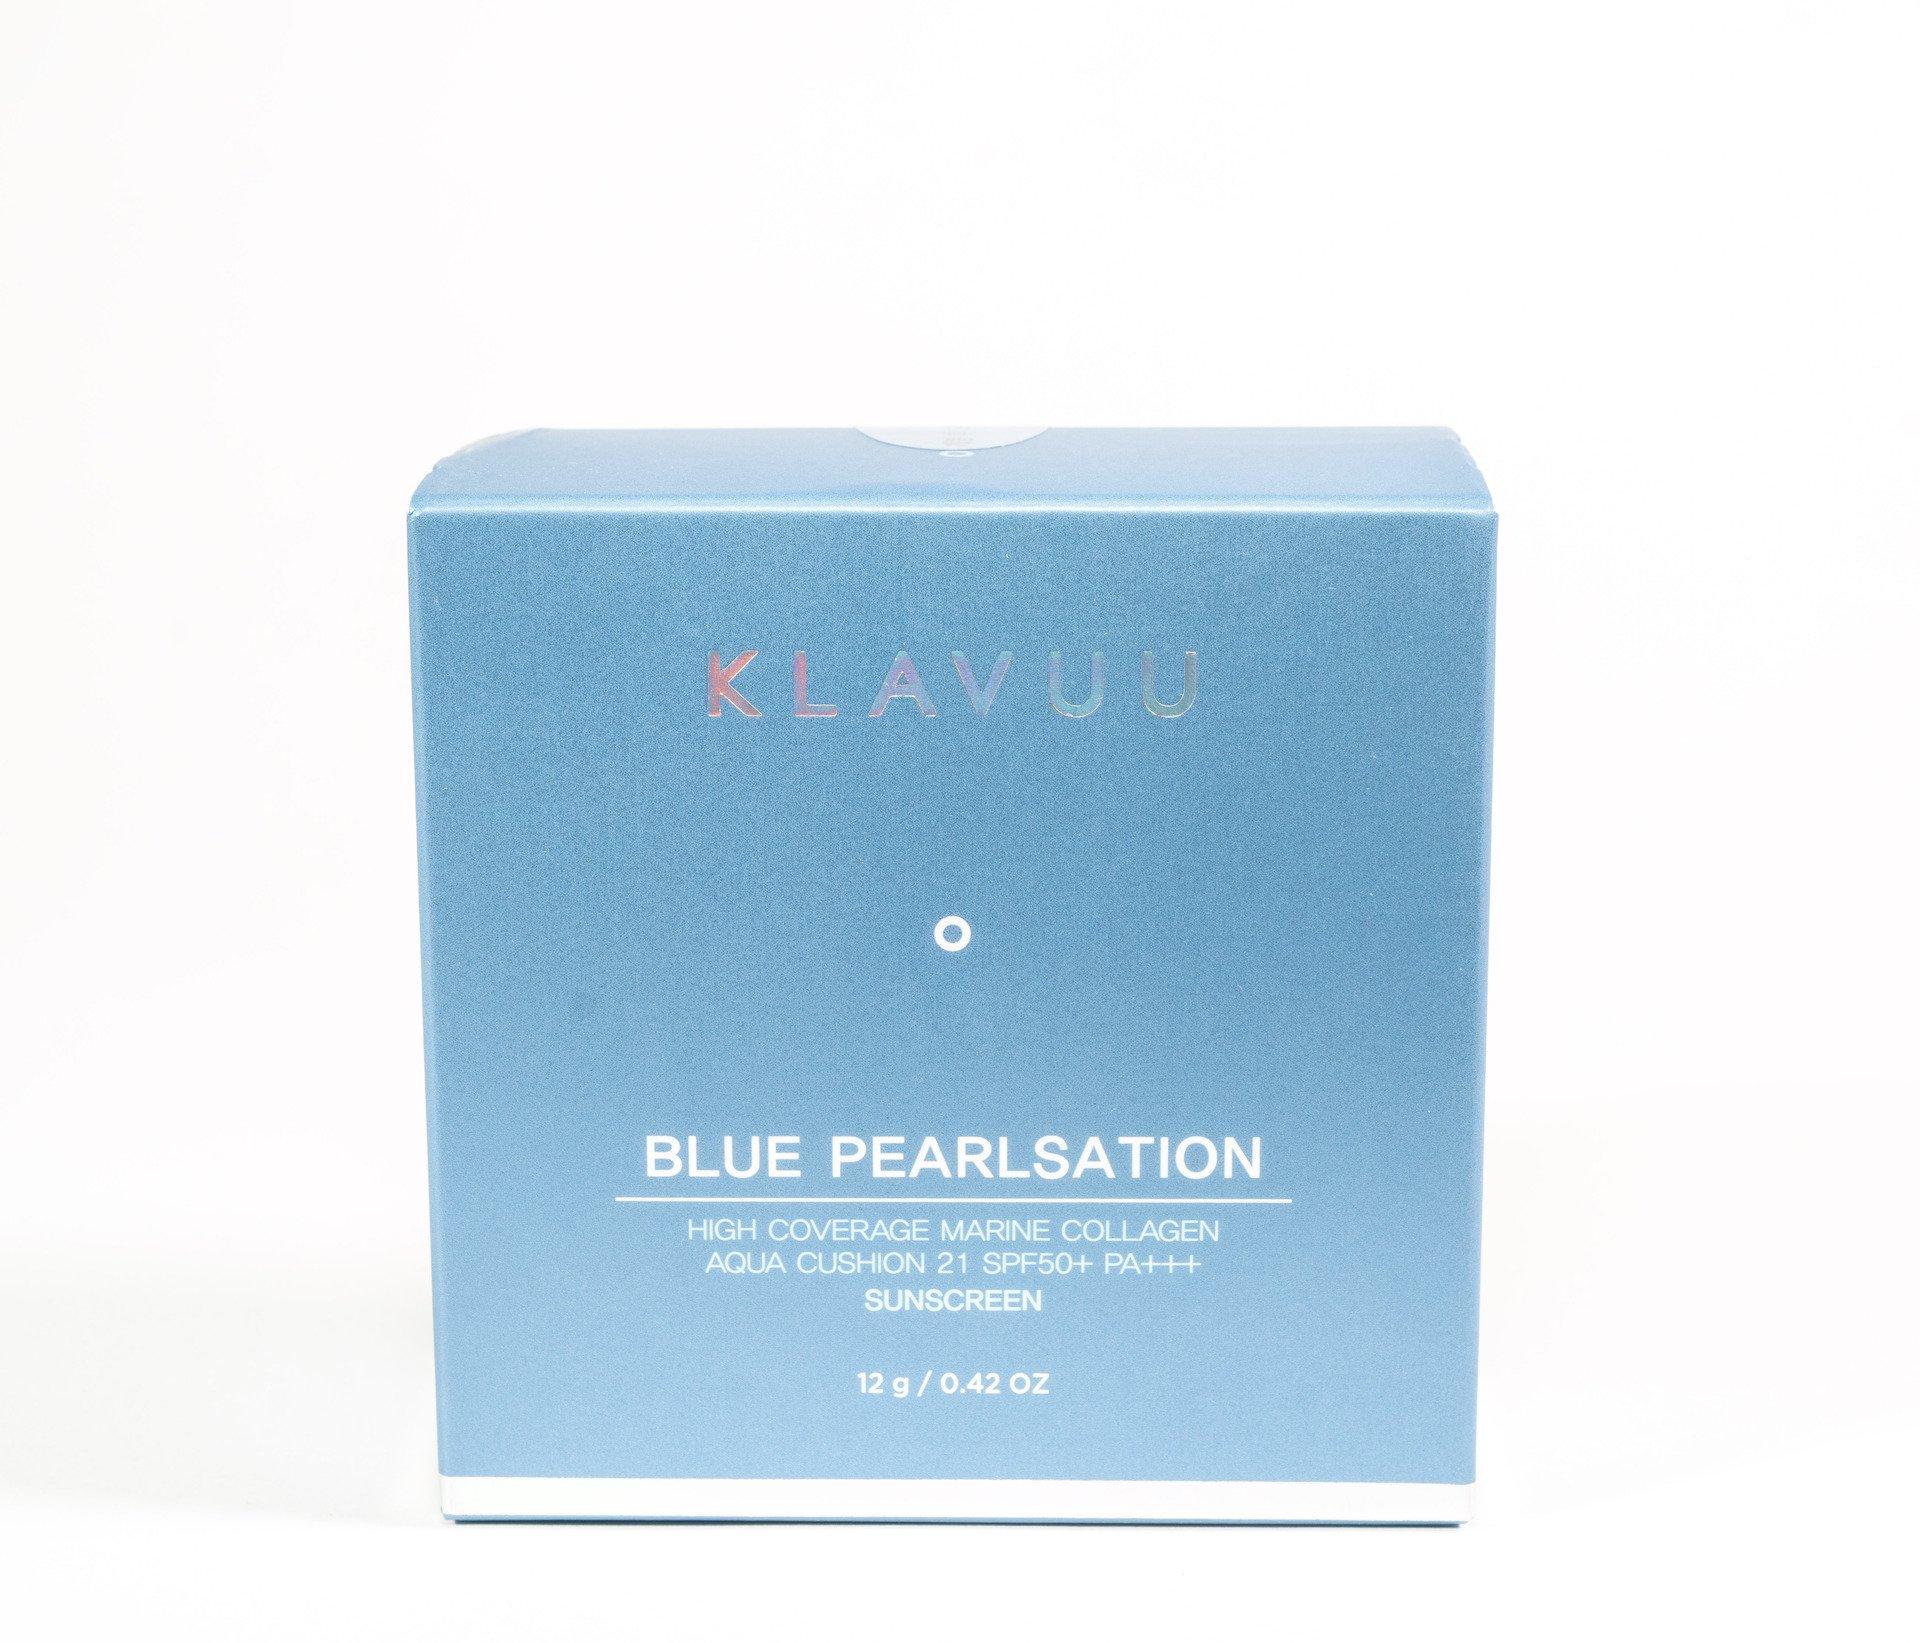 KLAVUU Blue Pearlsation High Coverage Marine Collagen Aqua Cushion Spf50+ PA+++